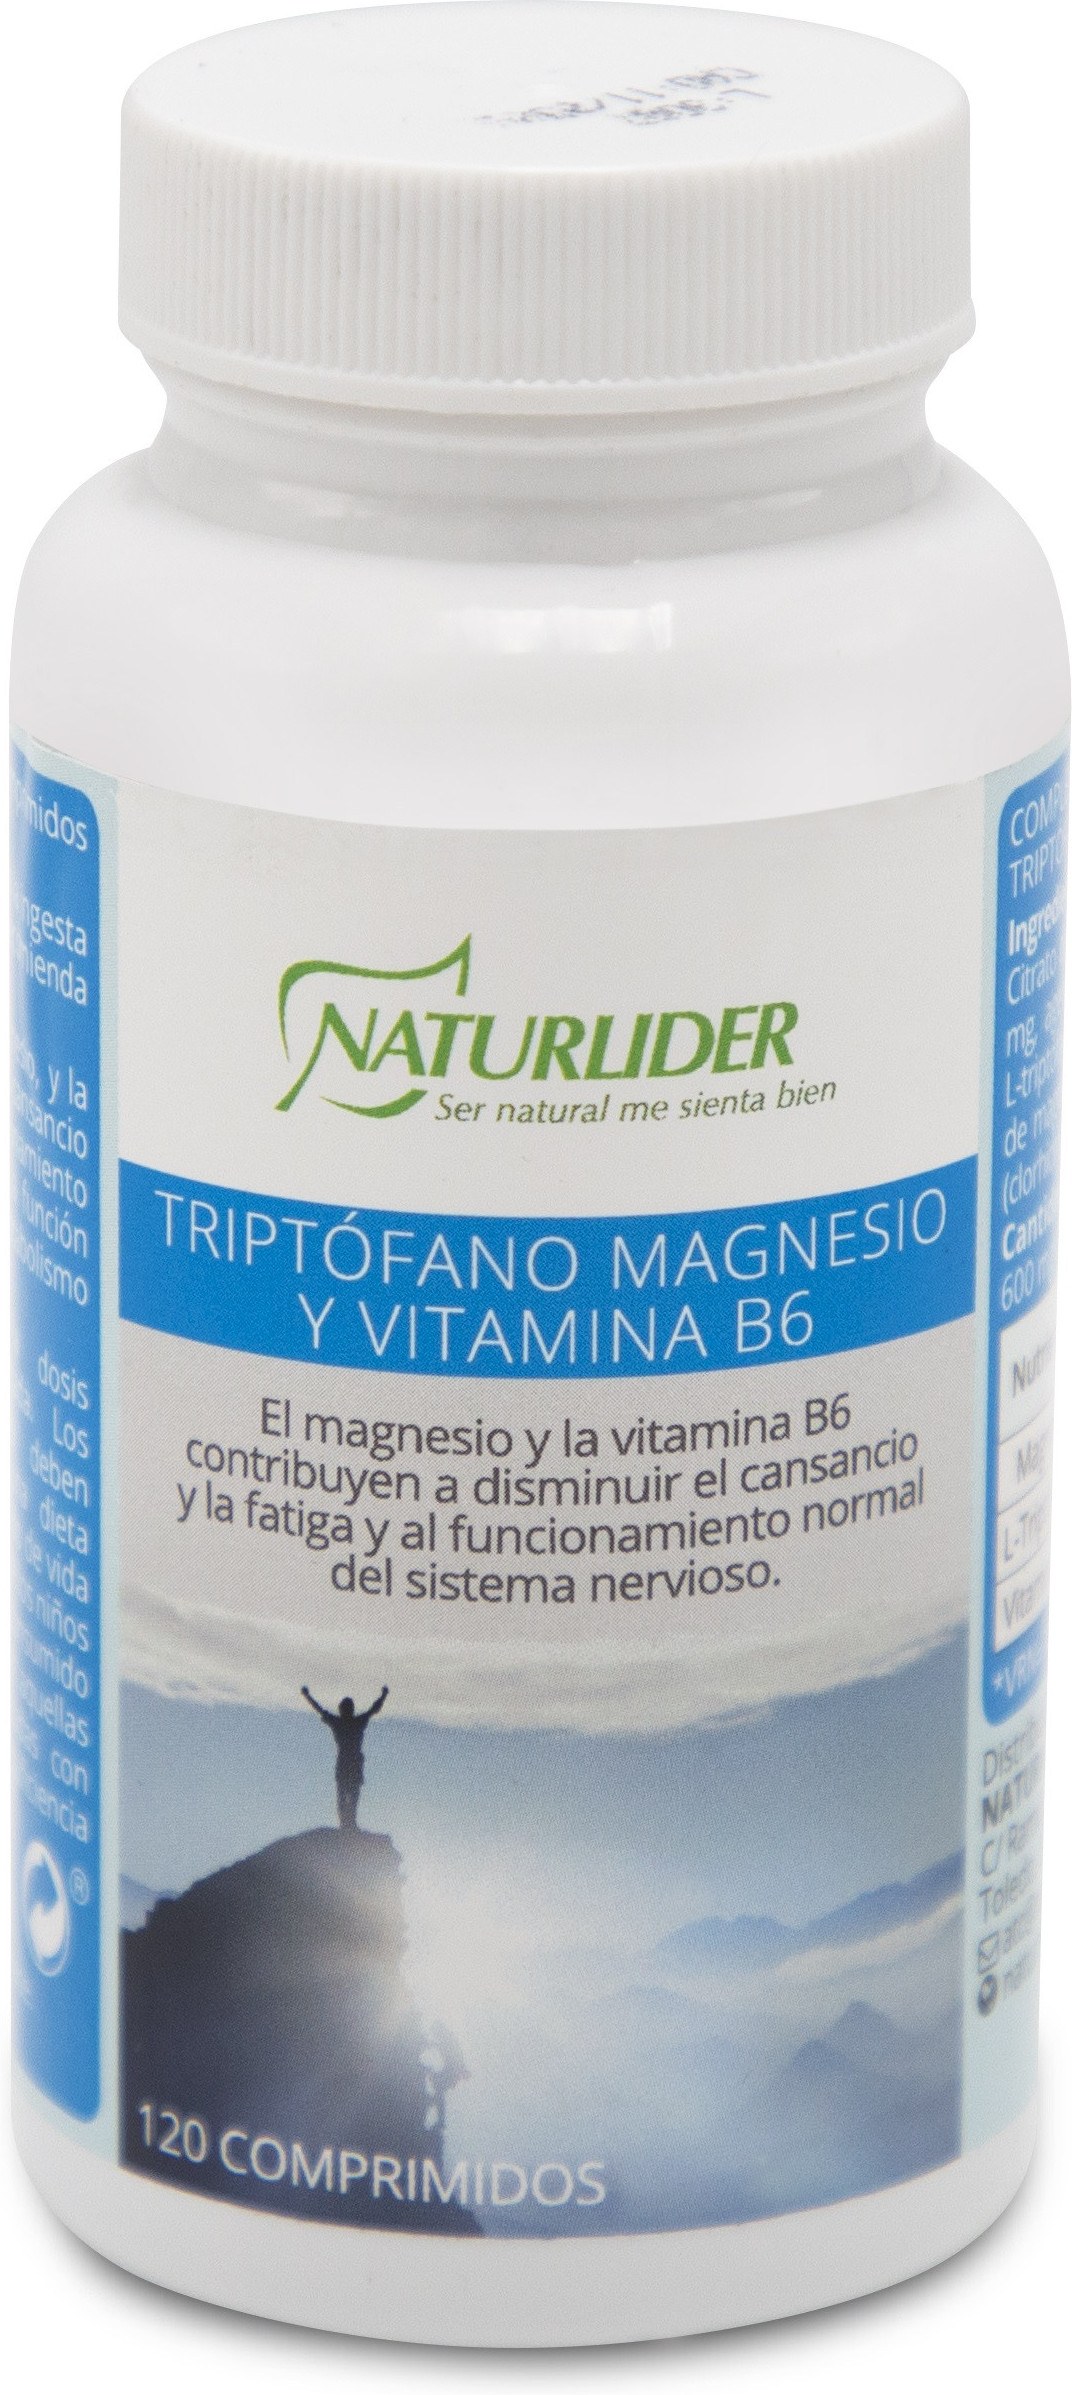 Naturlider Triptofano Magnesio vitamina b6 citrato de para esos ansiedad insomnio irritabilidad 120 suplemento alimentar